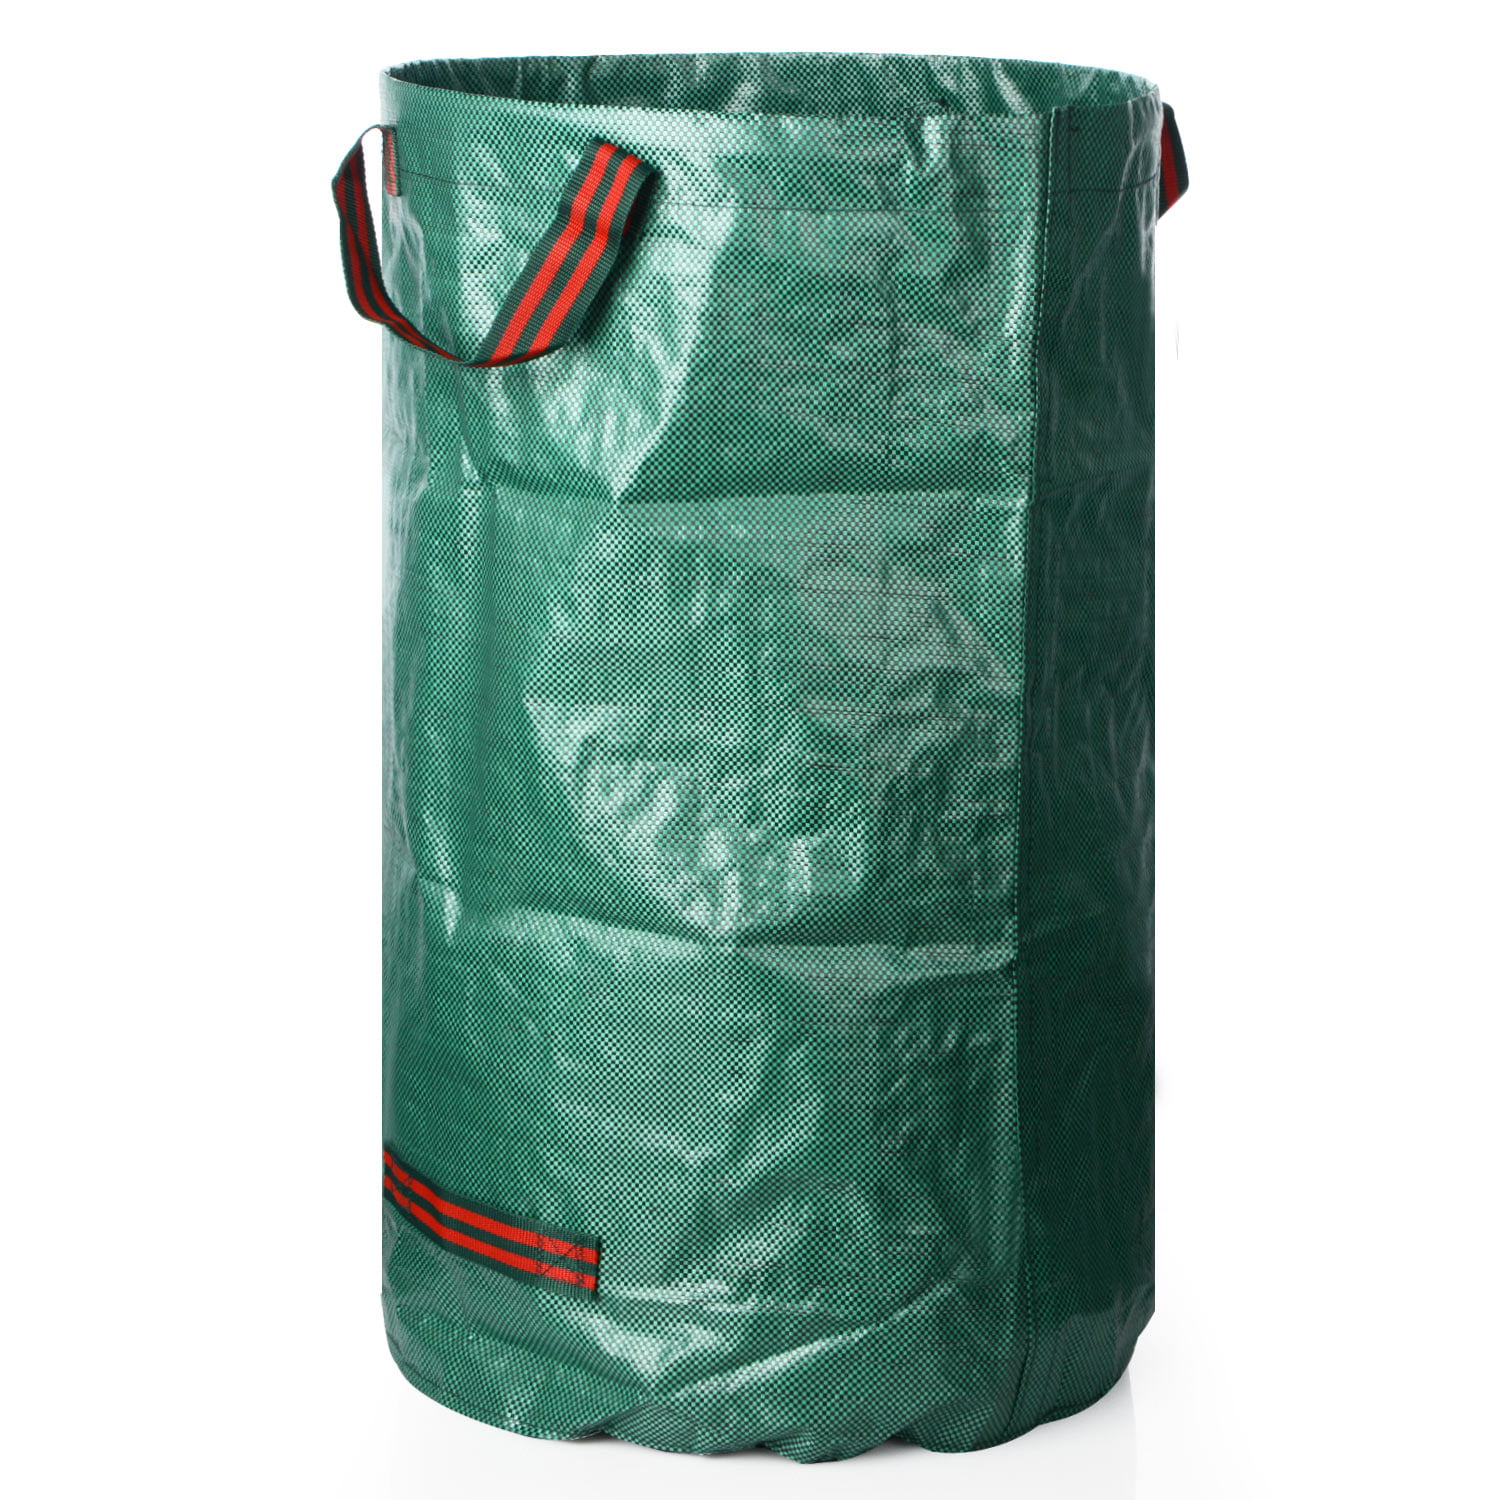 TRIEtree Garden Bag 120L/32 Gallon Portable Collapsible Reuseable Yard Waste Bag Gardening Trash Lawn Leaf Bag,Pack of 3 